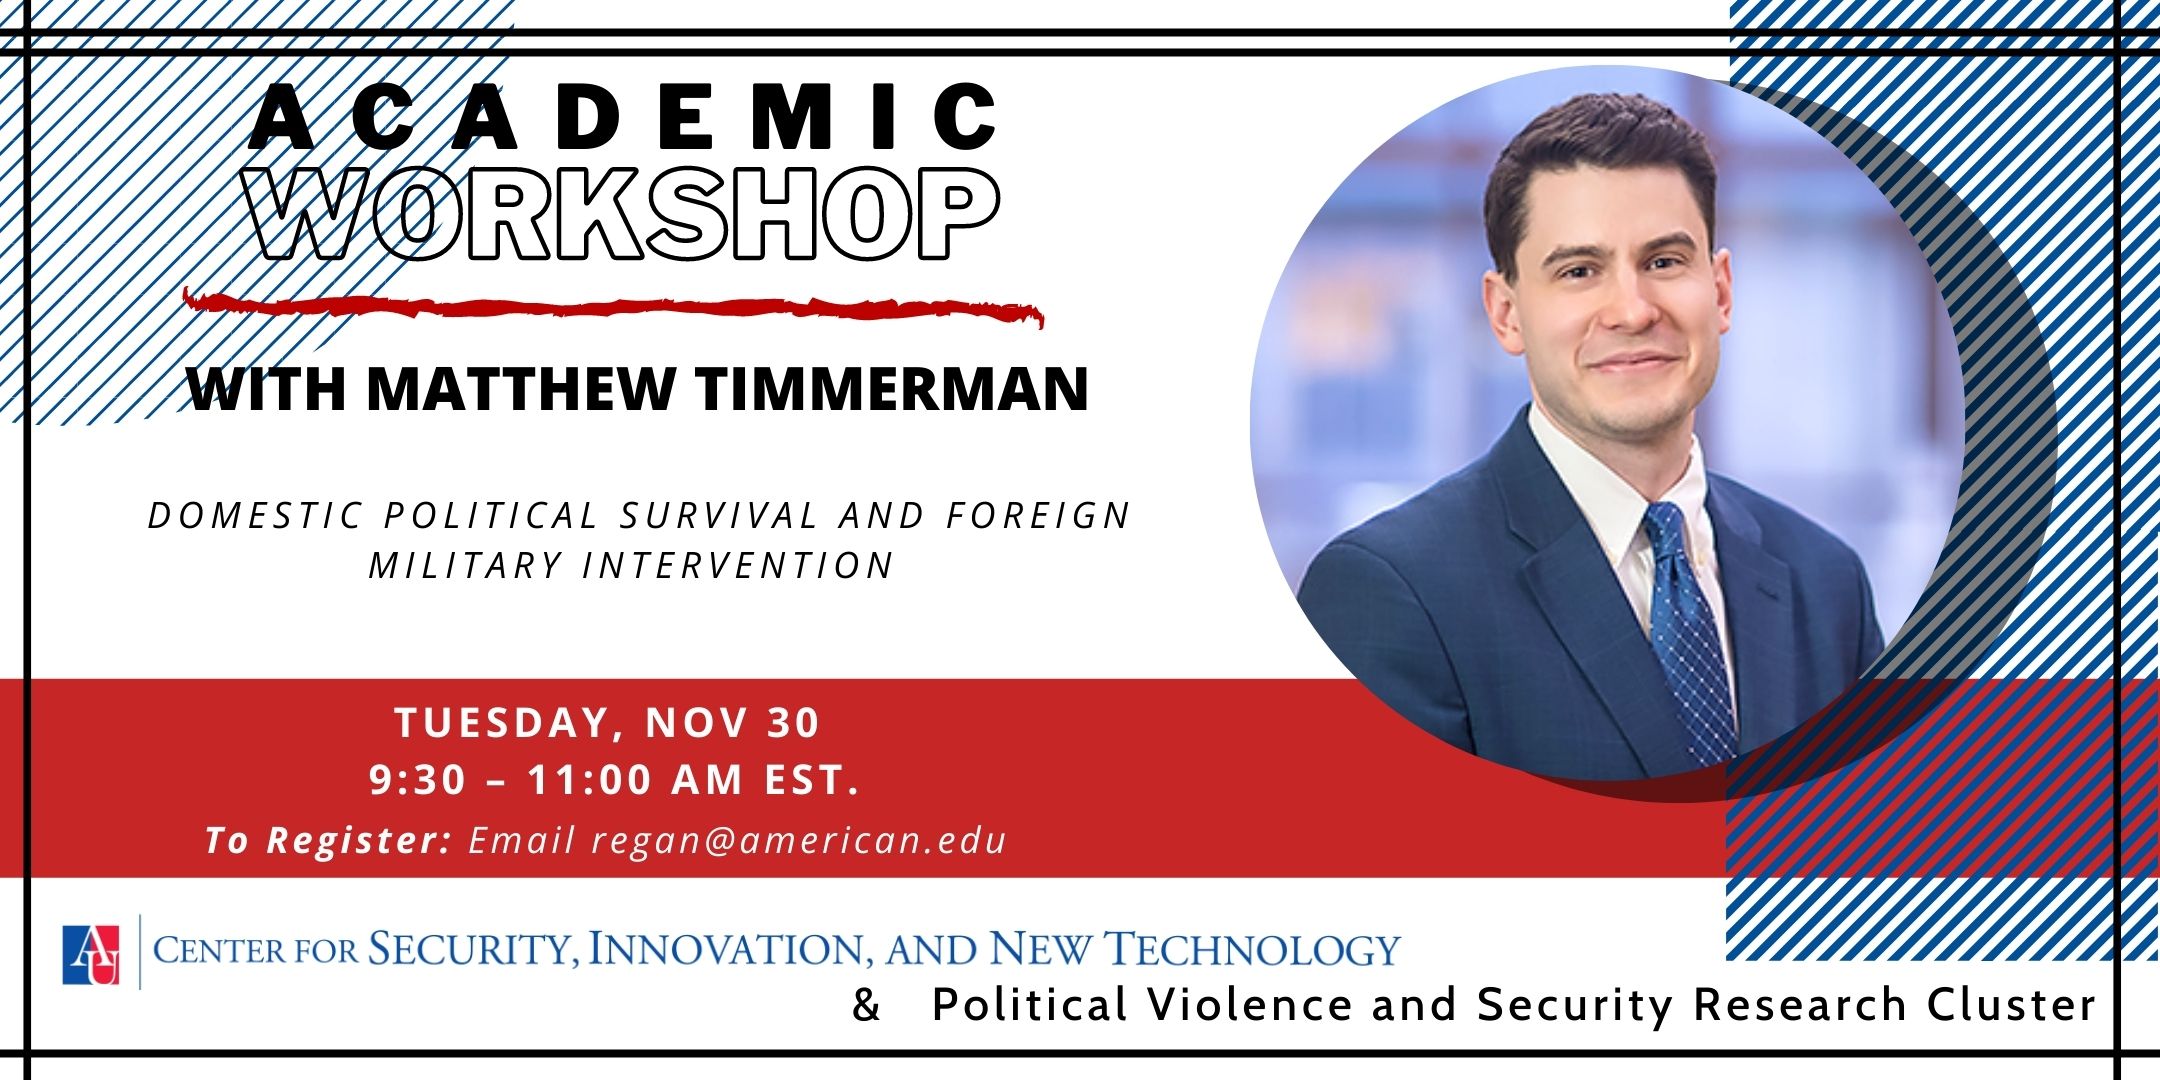 Email regan@american.edu to register for November 30 Academic Workshop with Matthew Timmerman